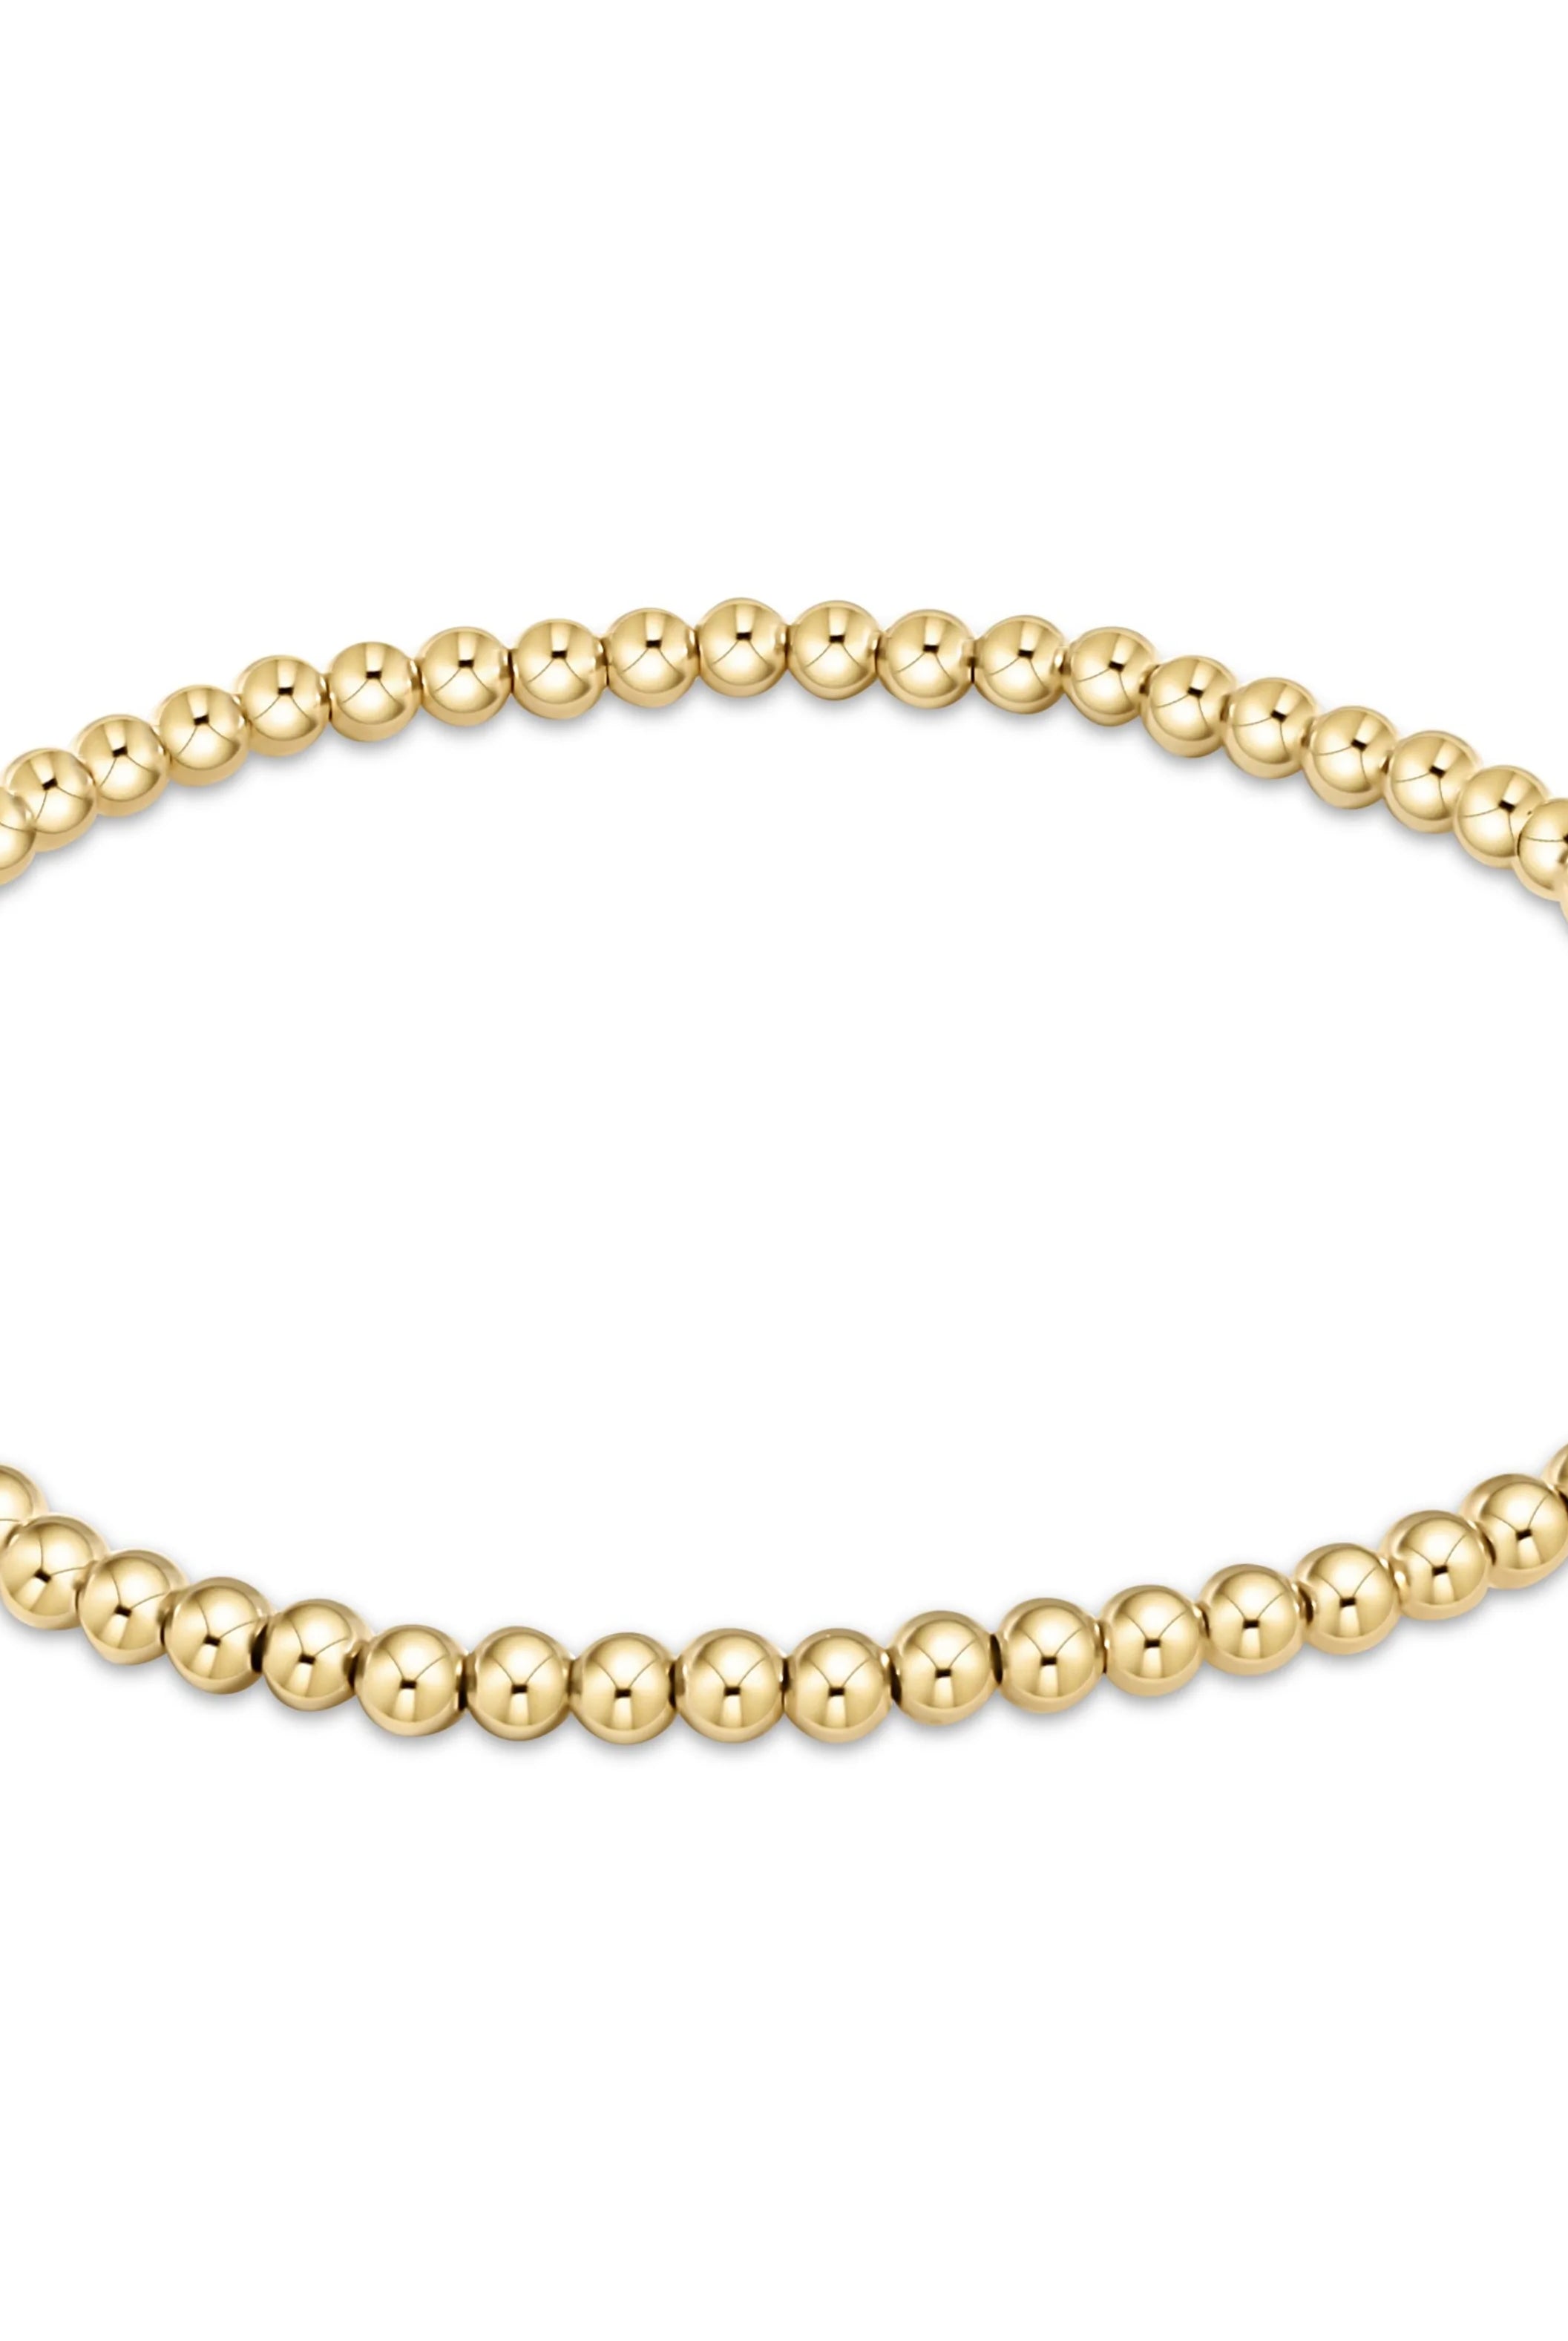 EXTENDS Classic Gold 3mm Bracelet-Bracelets-eNewton-The Lovely Closet, Women's Fashion Boutique in Alexandria, KY